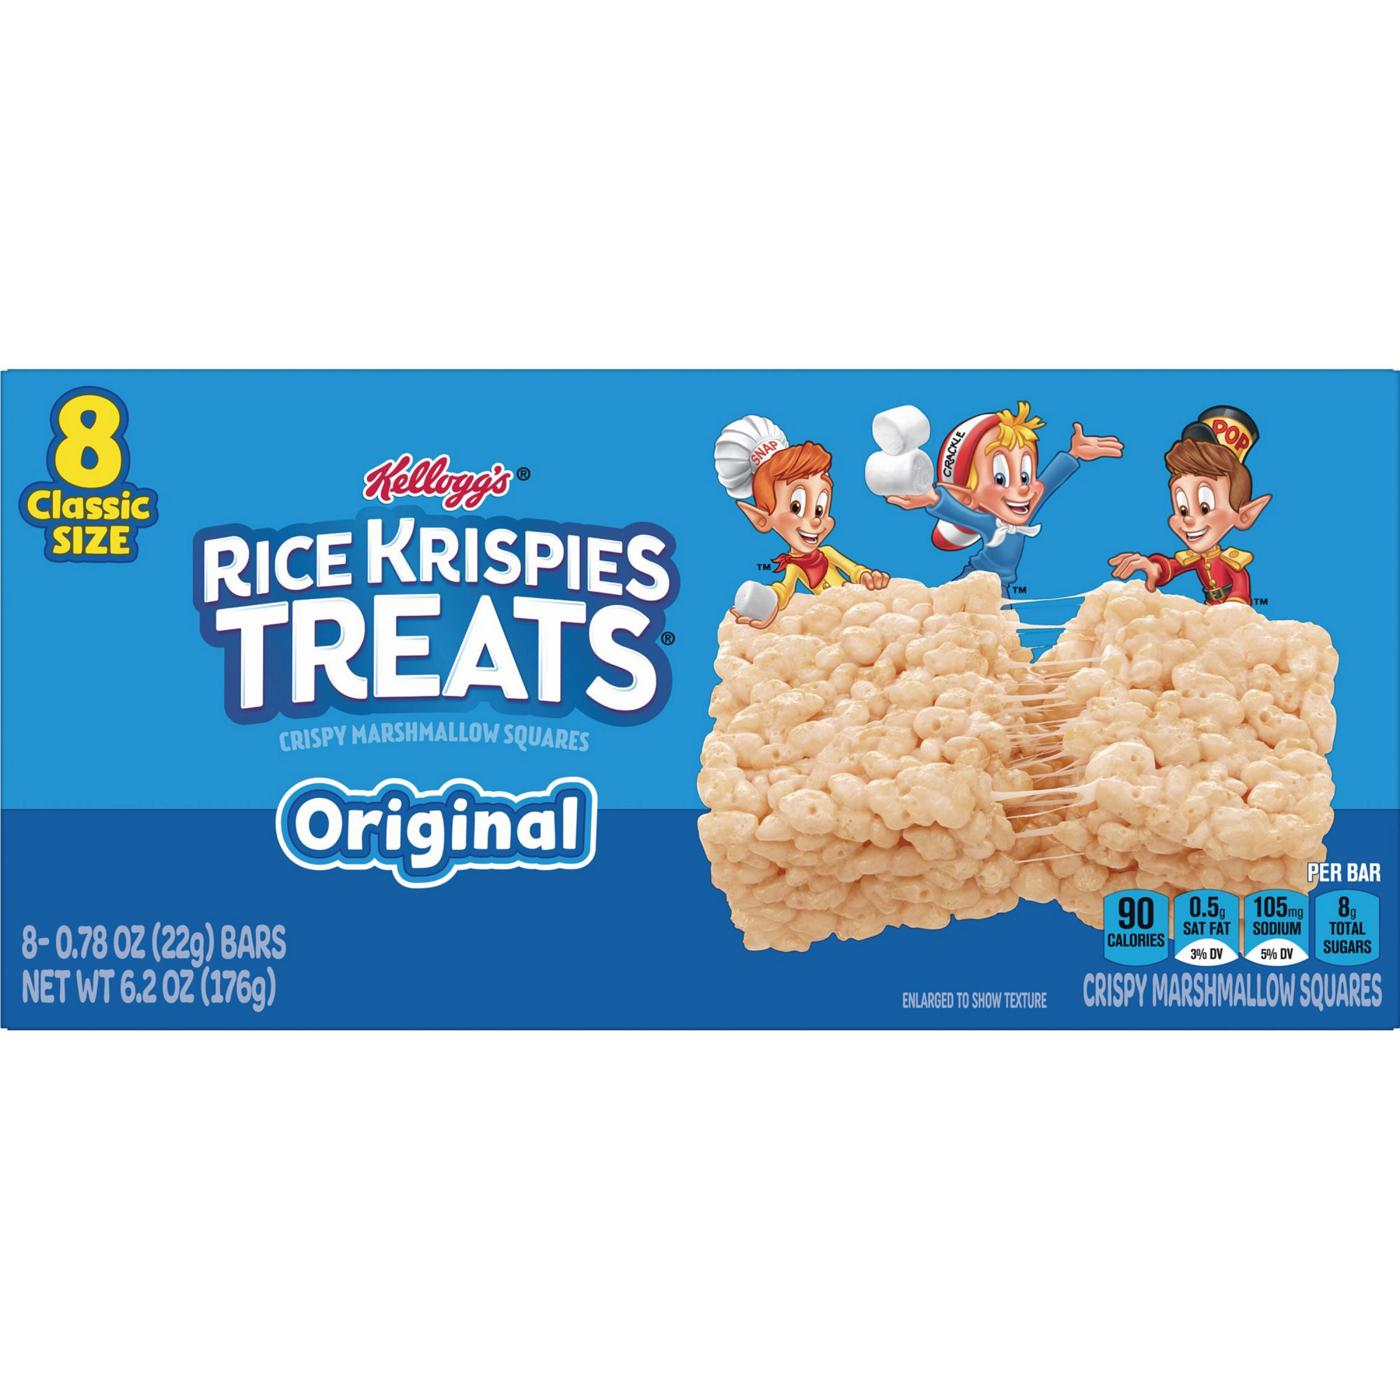 Rice Krispies Treats Original Crispy Marshmallow Squares; image 2 of 6